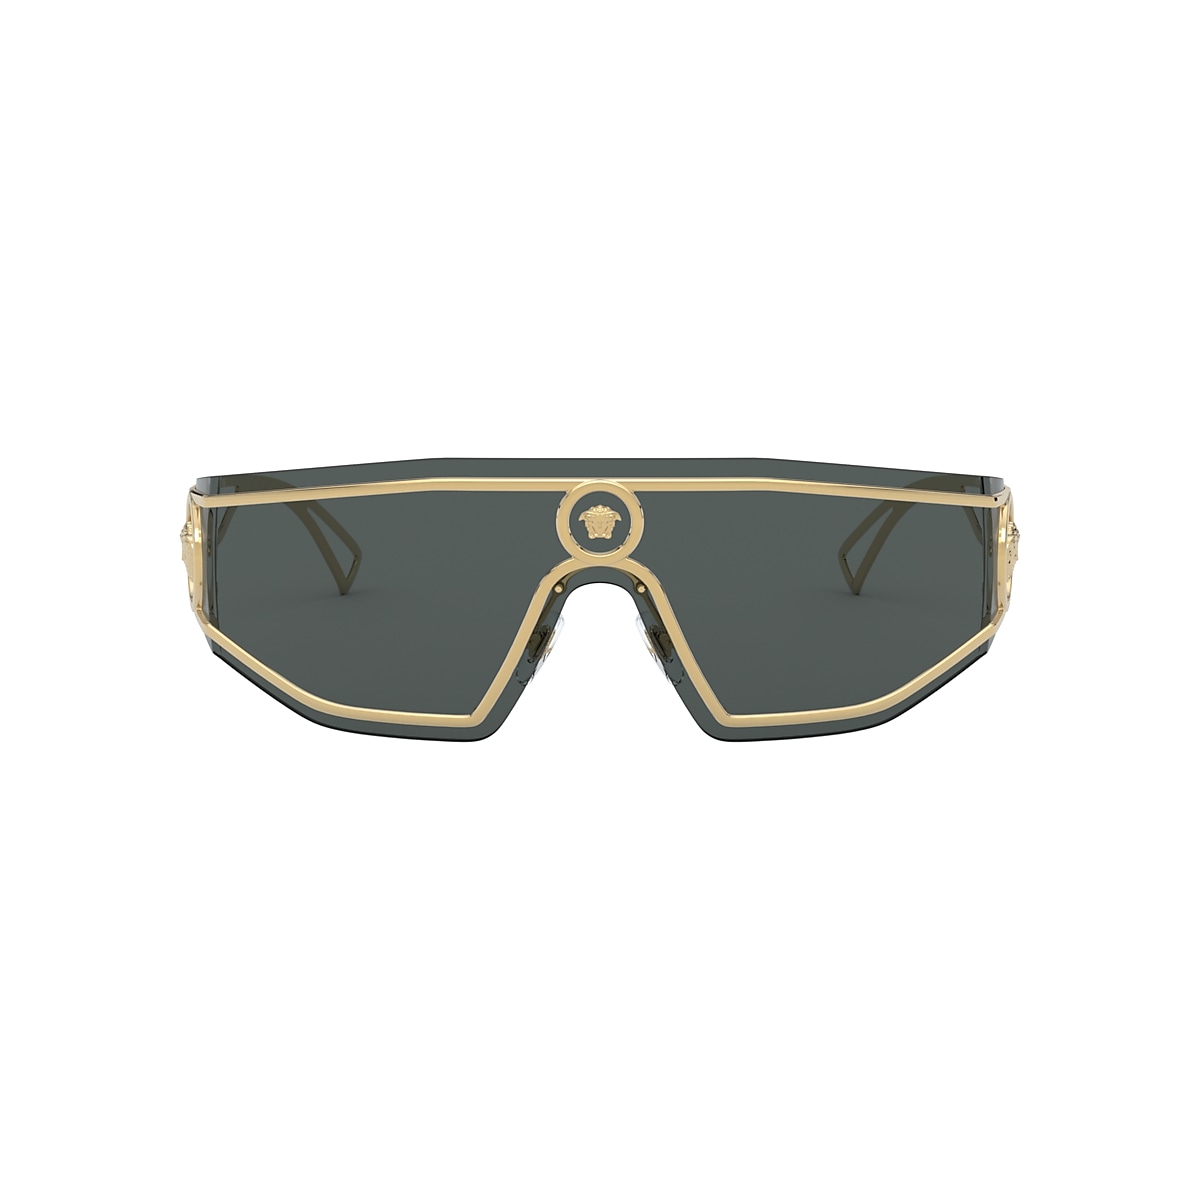 Versace VE2226 01 Grey & Gold Sunglasses | Sunglass Hut USA